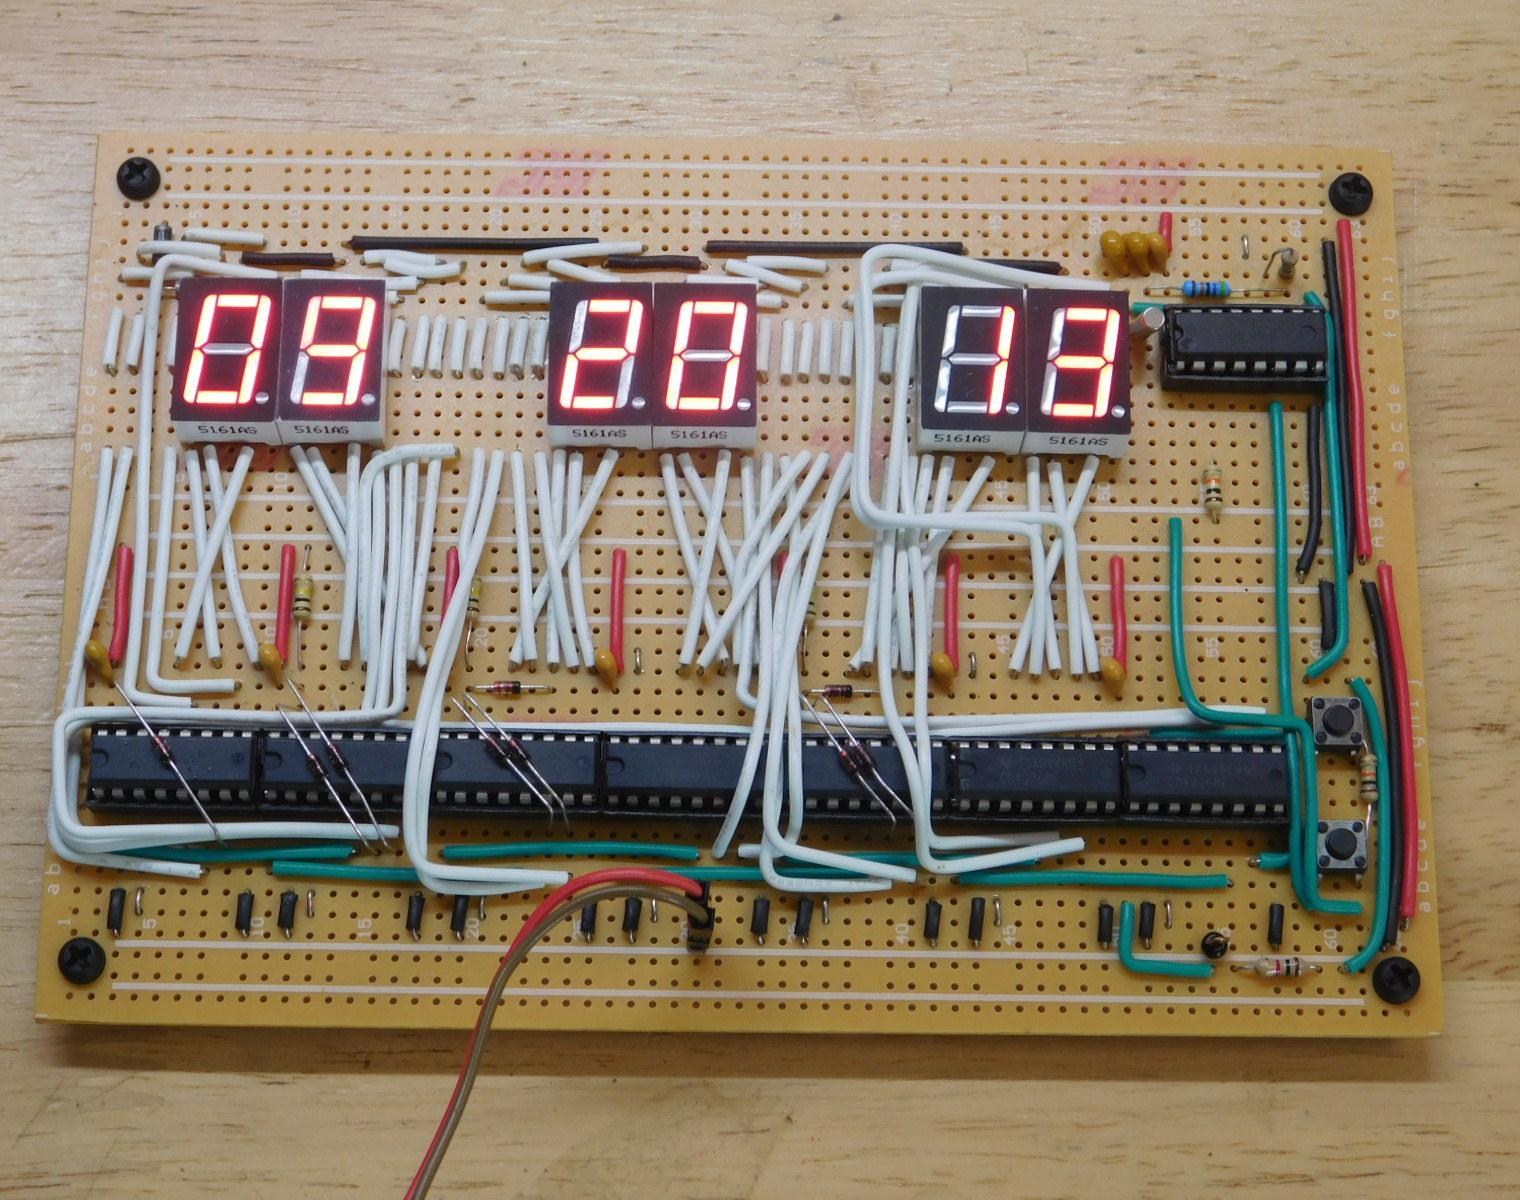 24 Hour Digital Clock (non Microcontroller)